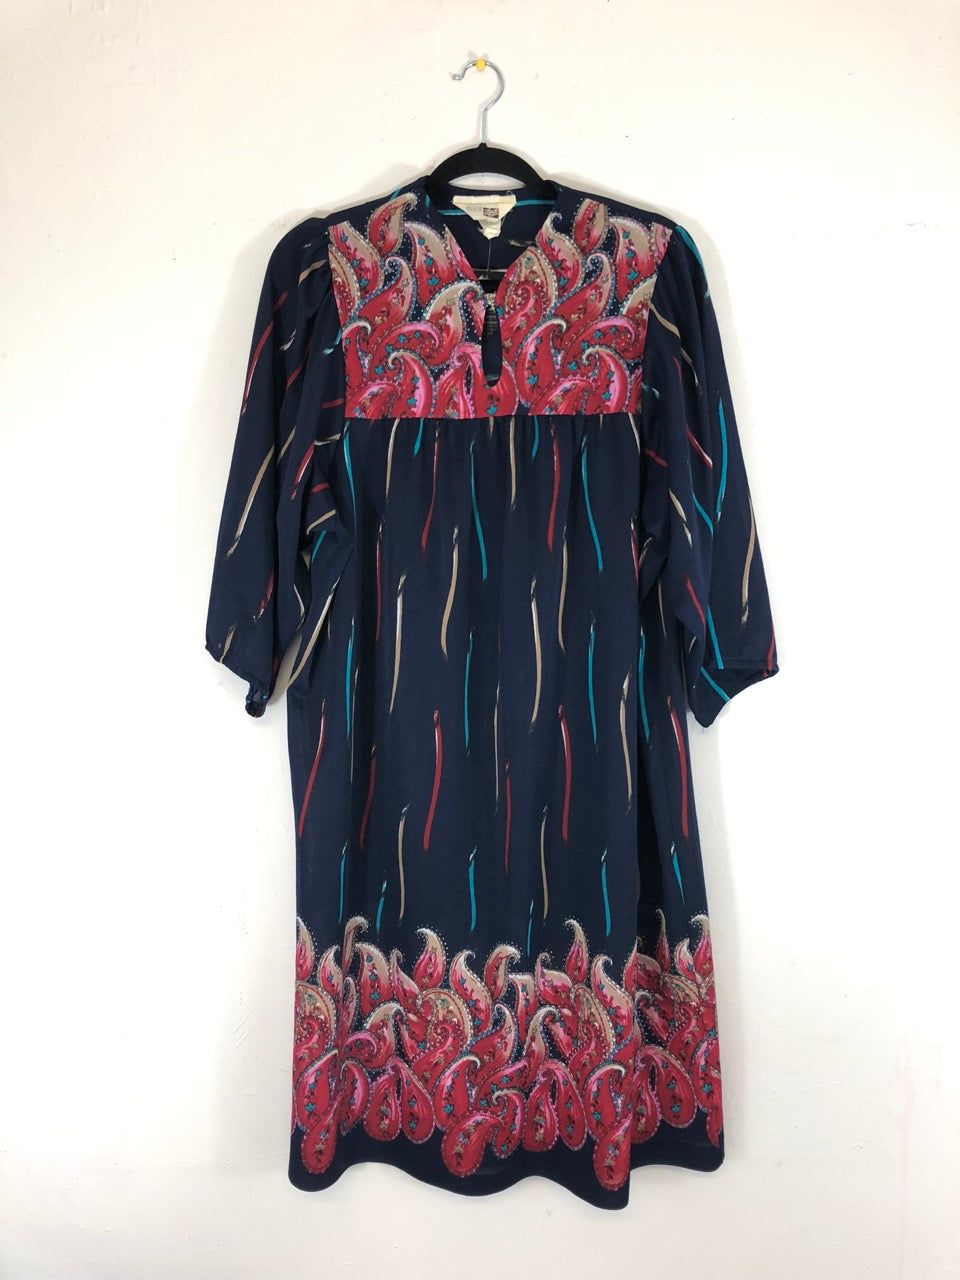 Sears / The Fashion Place Hippie Dress